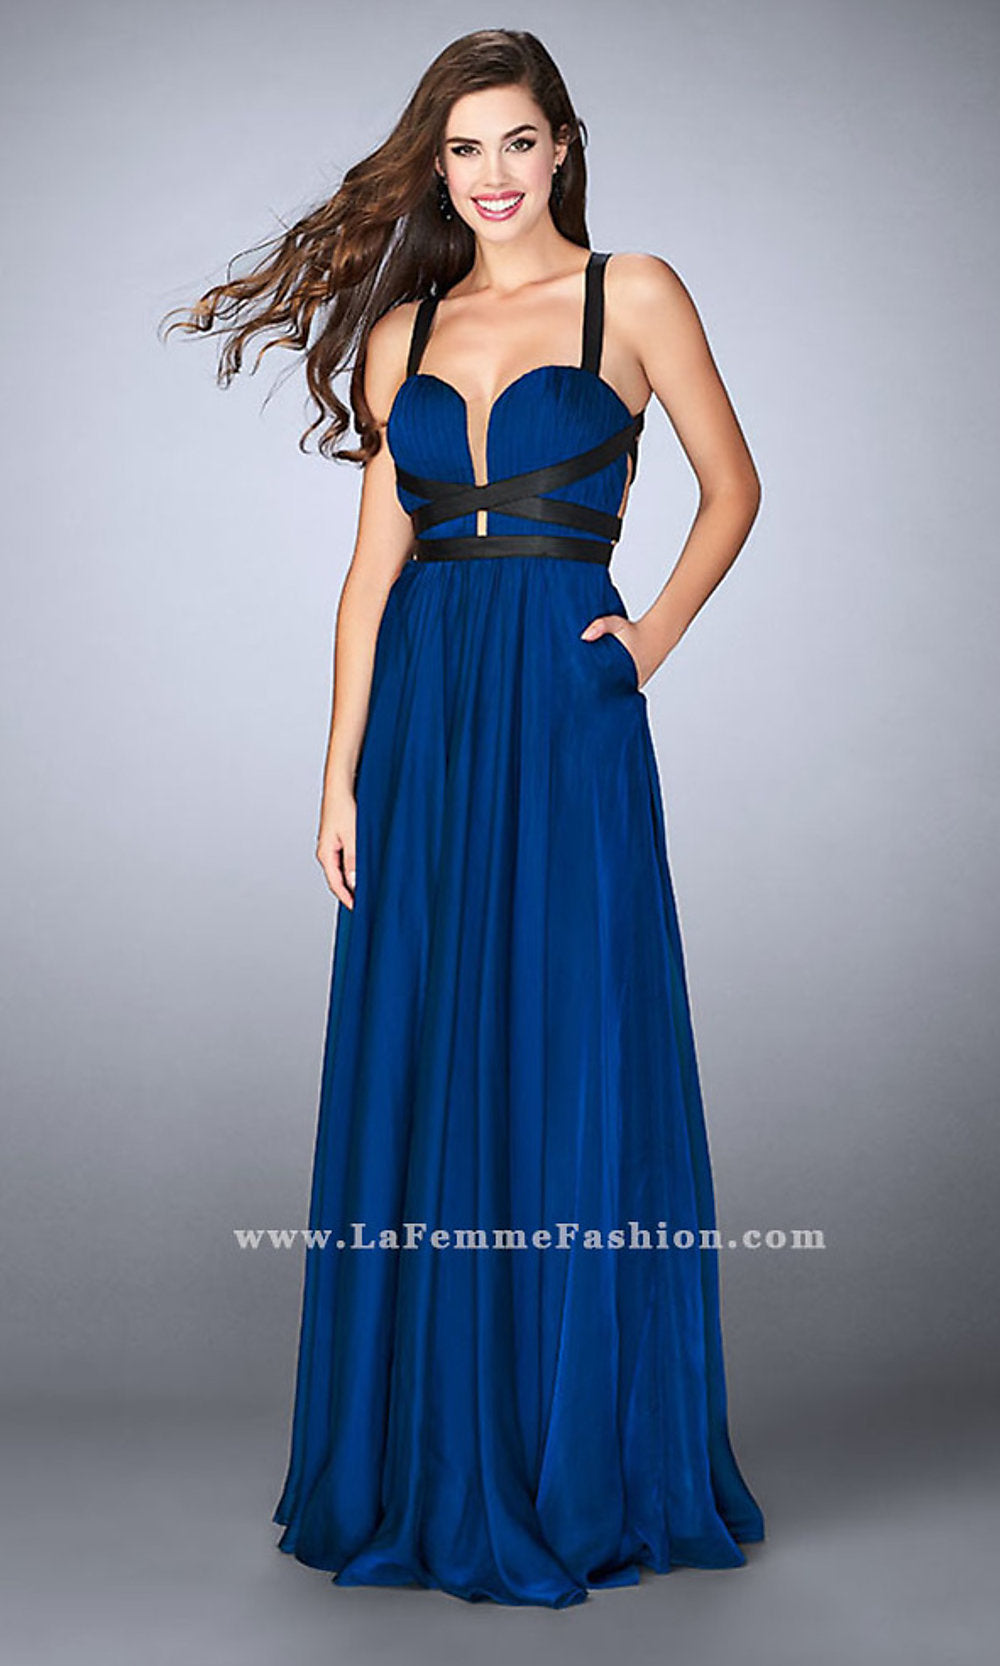 Marine Blue Long Prom Dress with Pockets